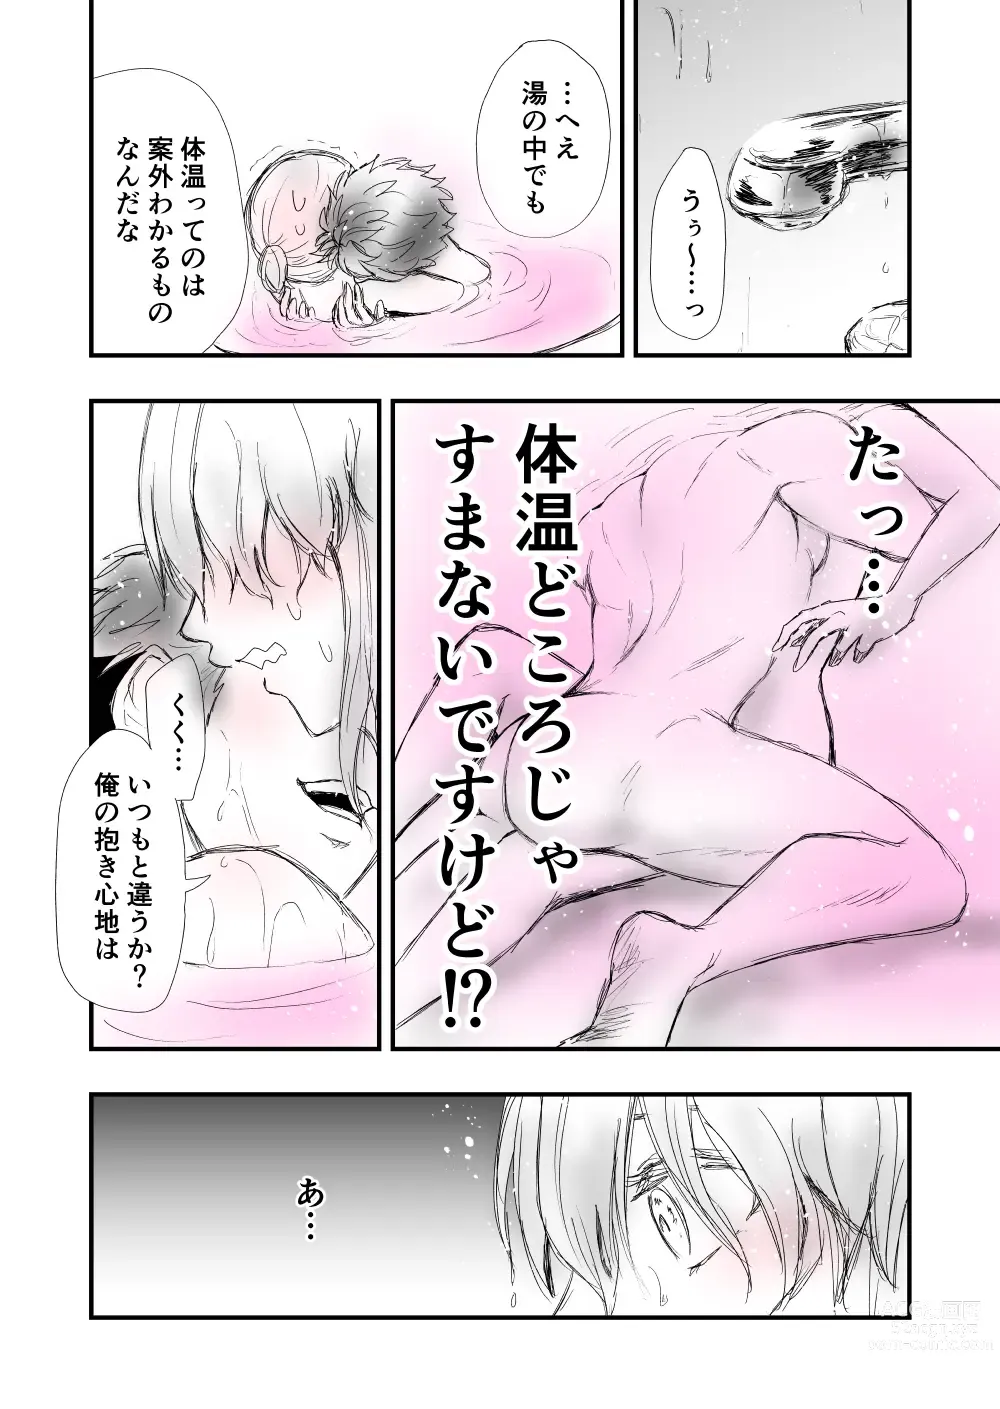 Page 10 of doujinshi 3